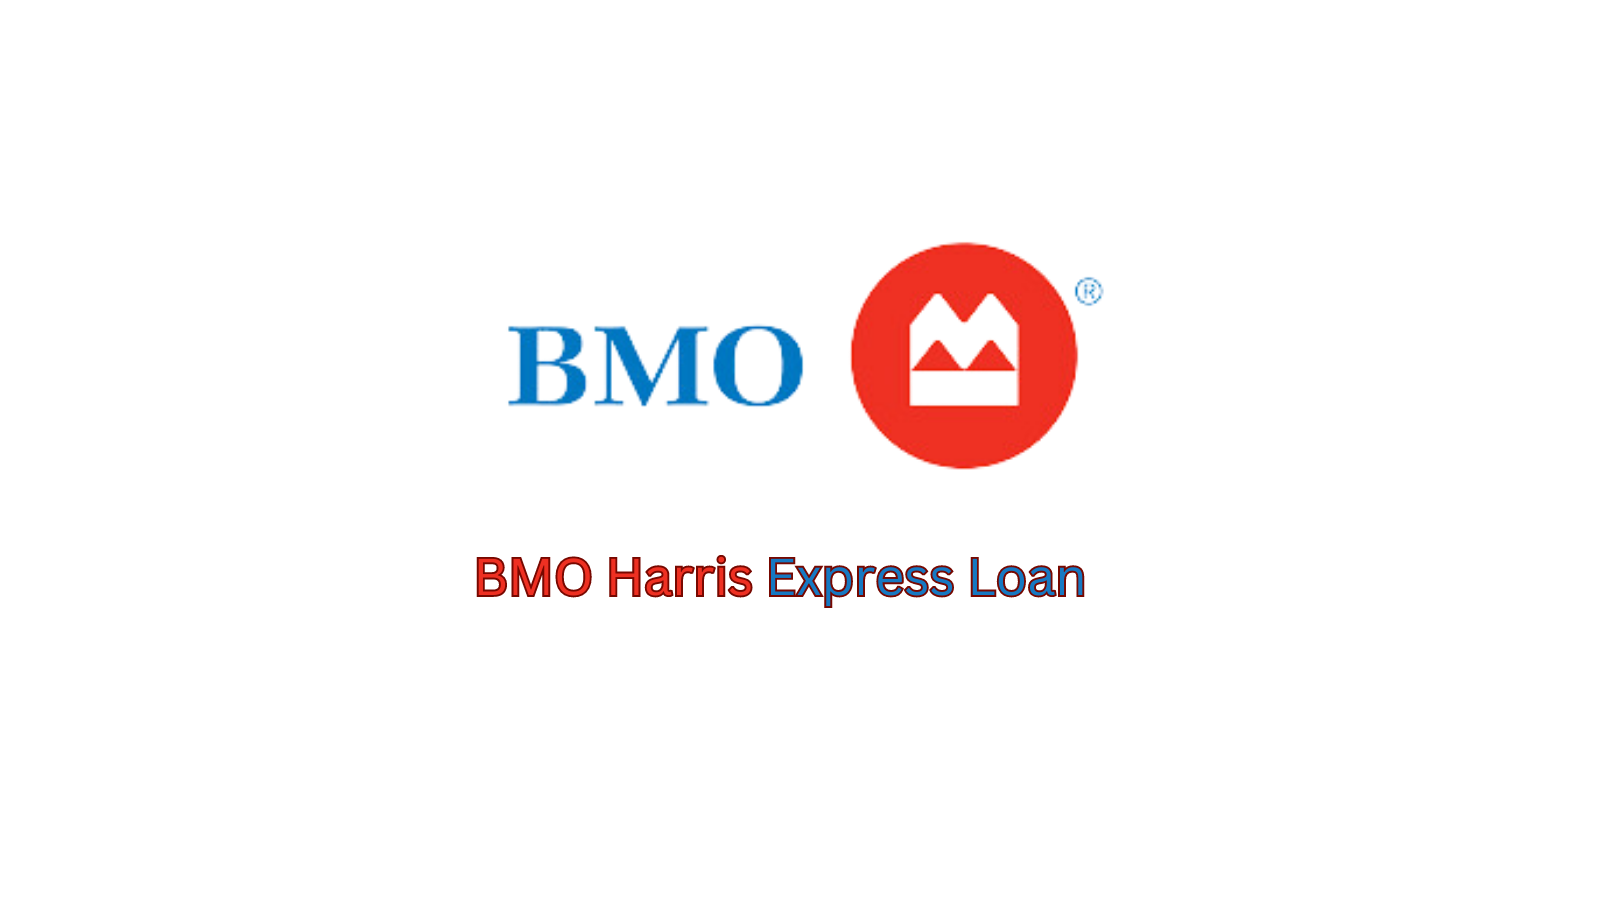 bmo harris express loan pay